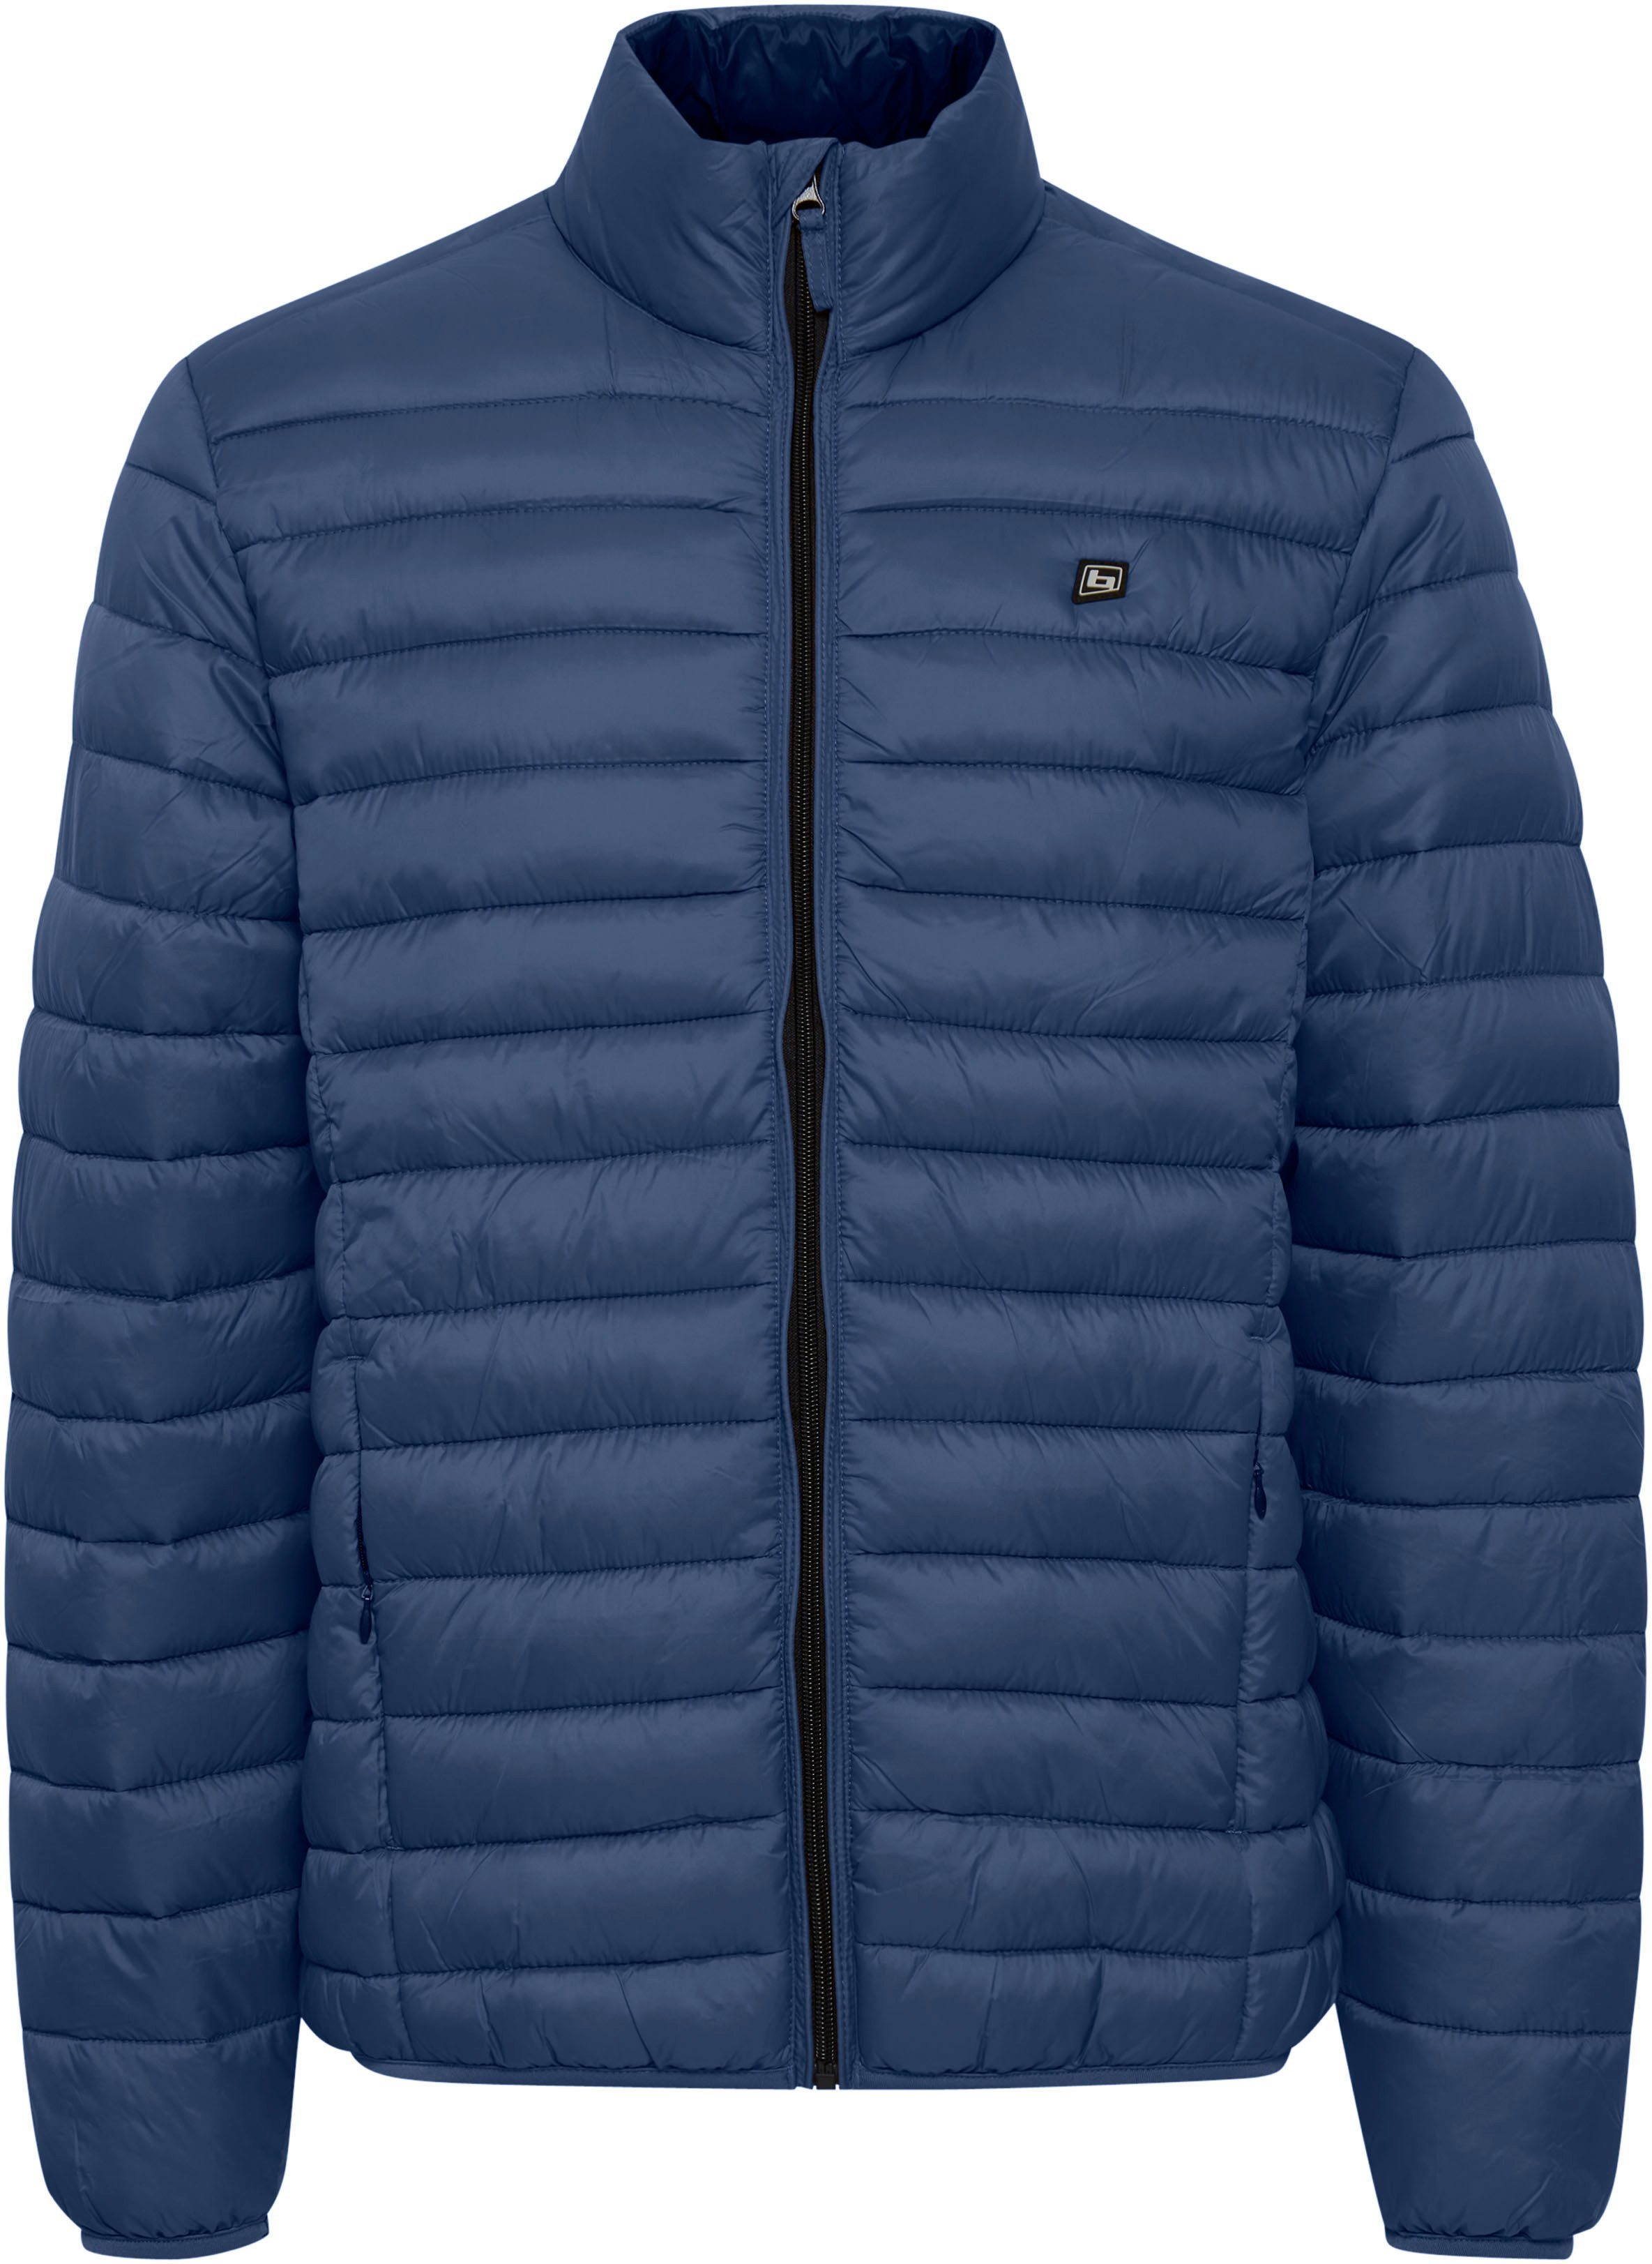 Bhromsey Jacket Steppjacke Blend blue